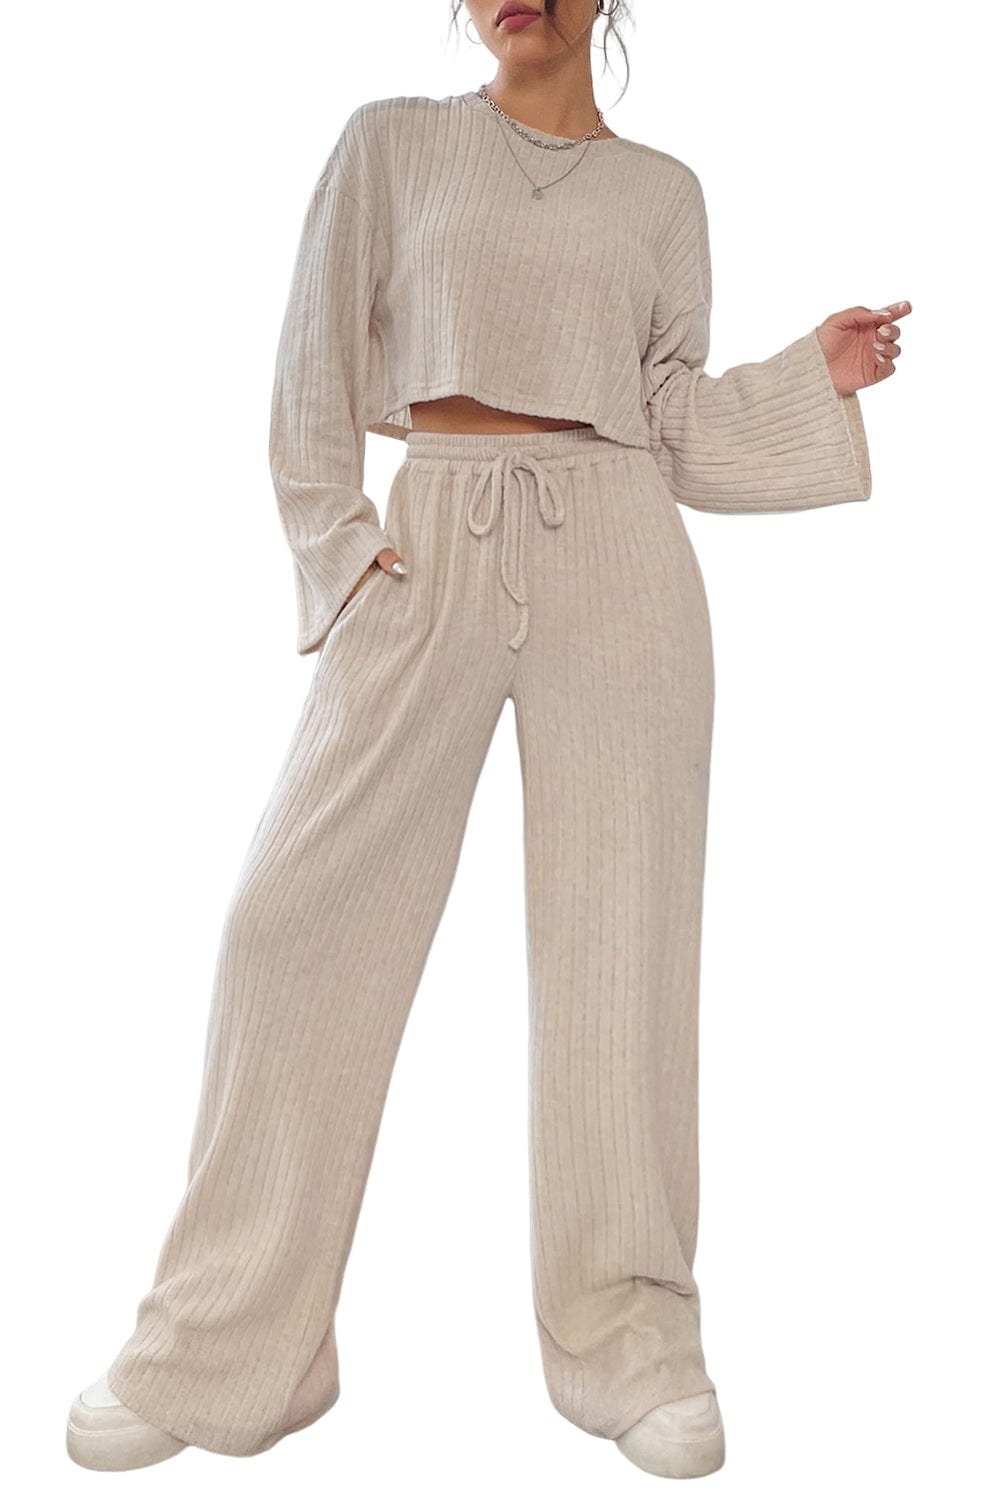 Shoppe EZR Loungewear Khaki Ribbed Knit Bell Sleeve Crop Top Drawstring Pants Set